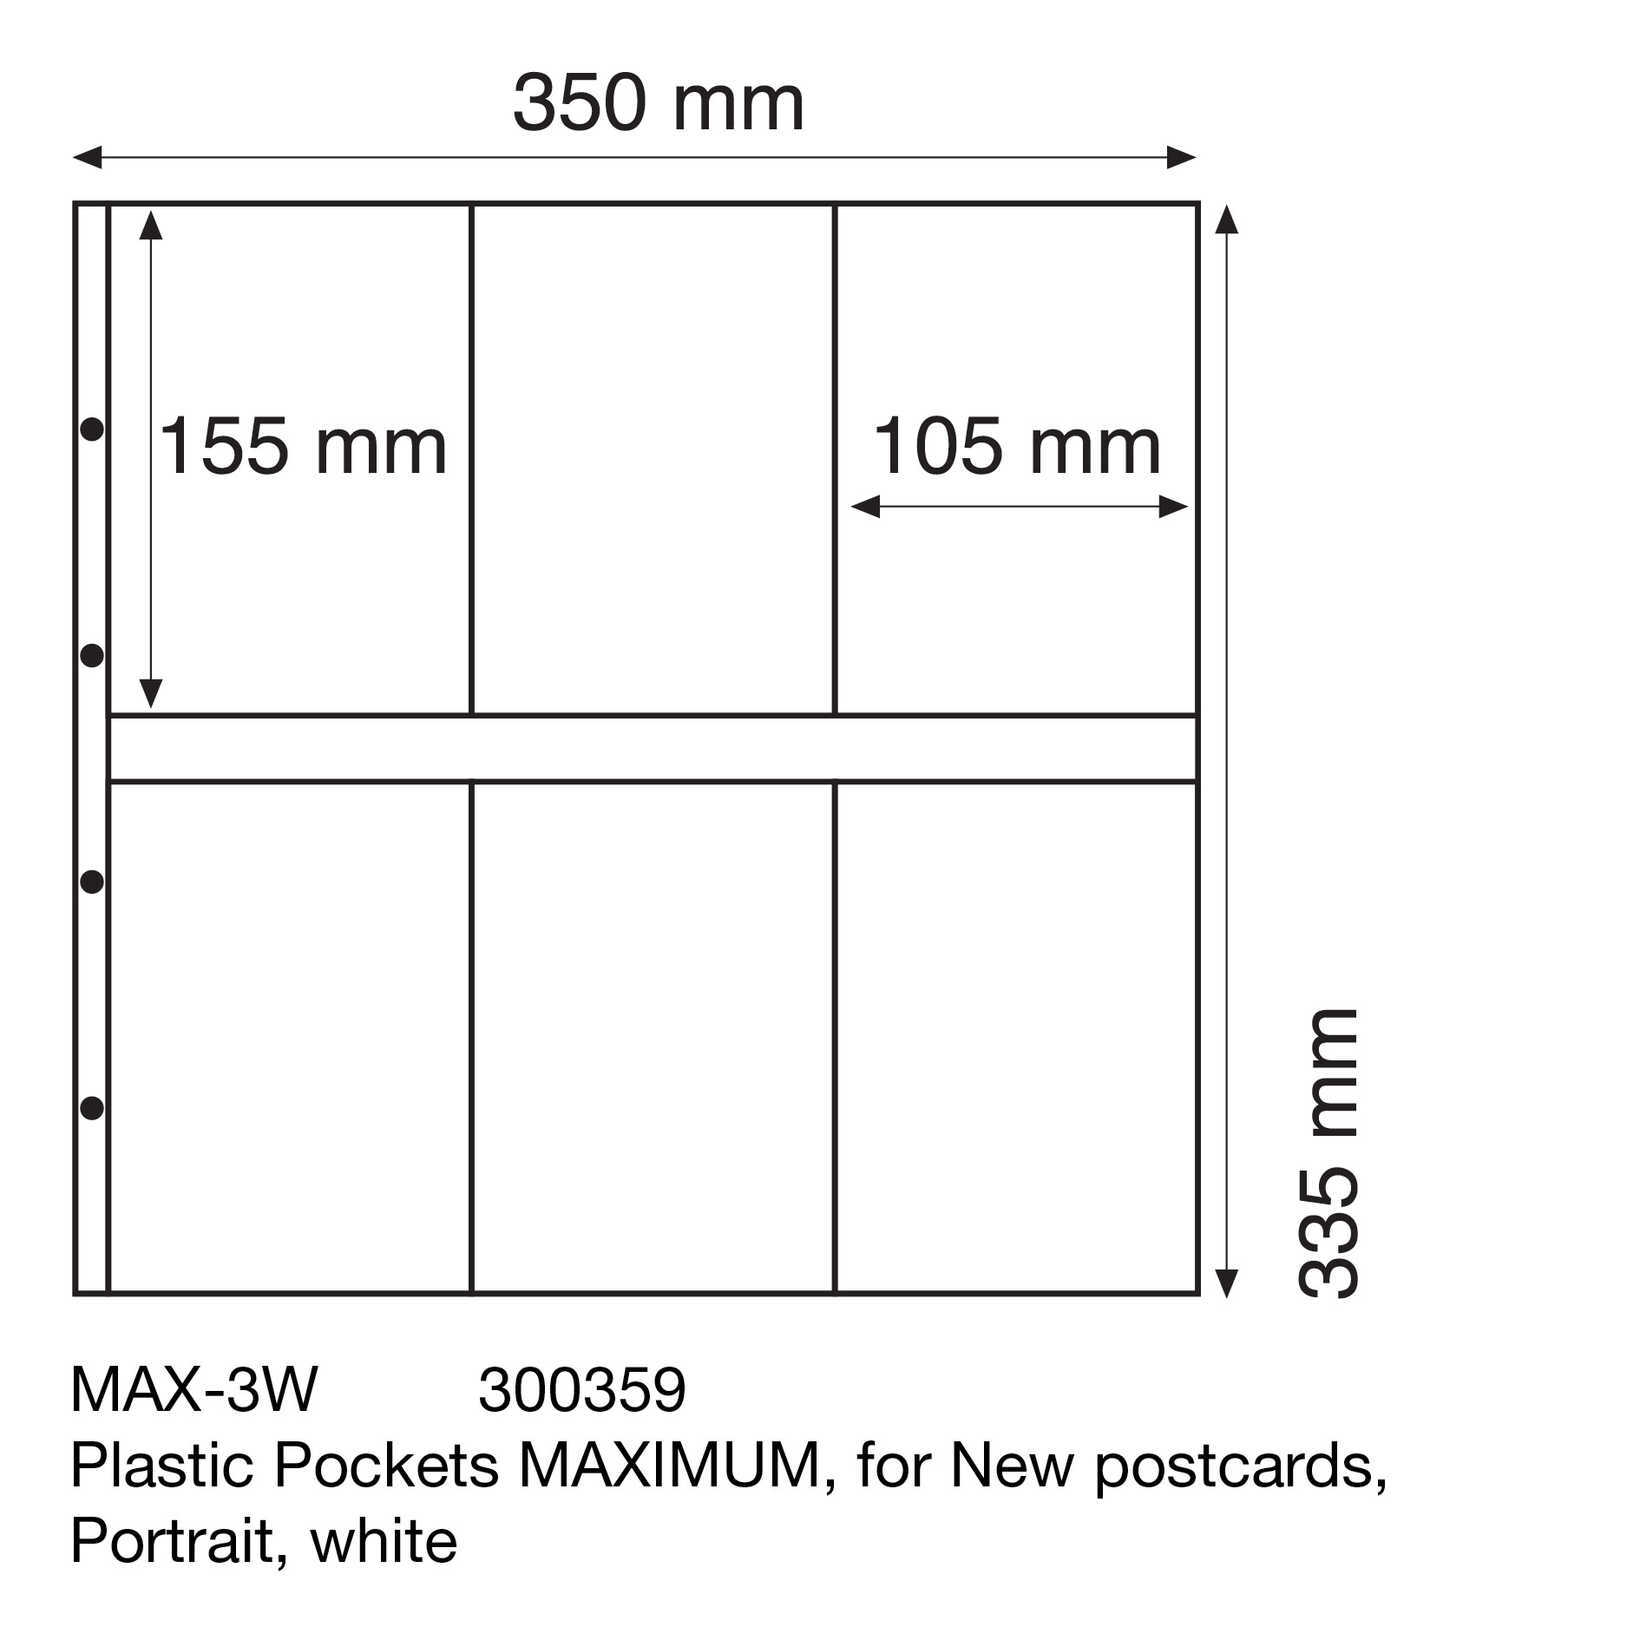 Plastic Pockets MAXIMUM, for New postcards, Portrait, white | Renniks